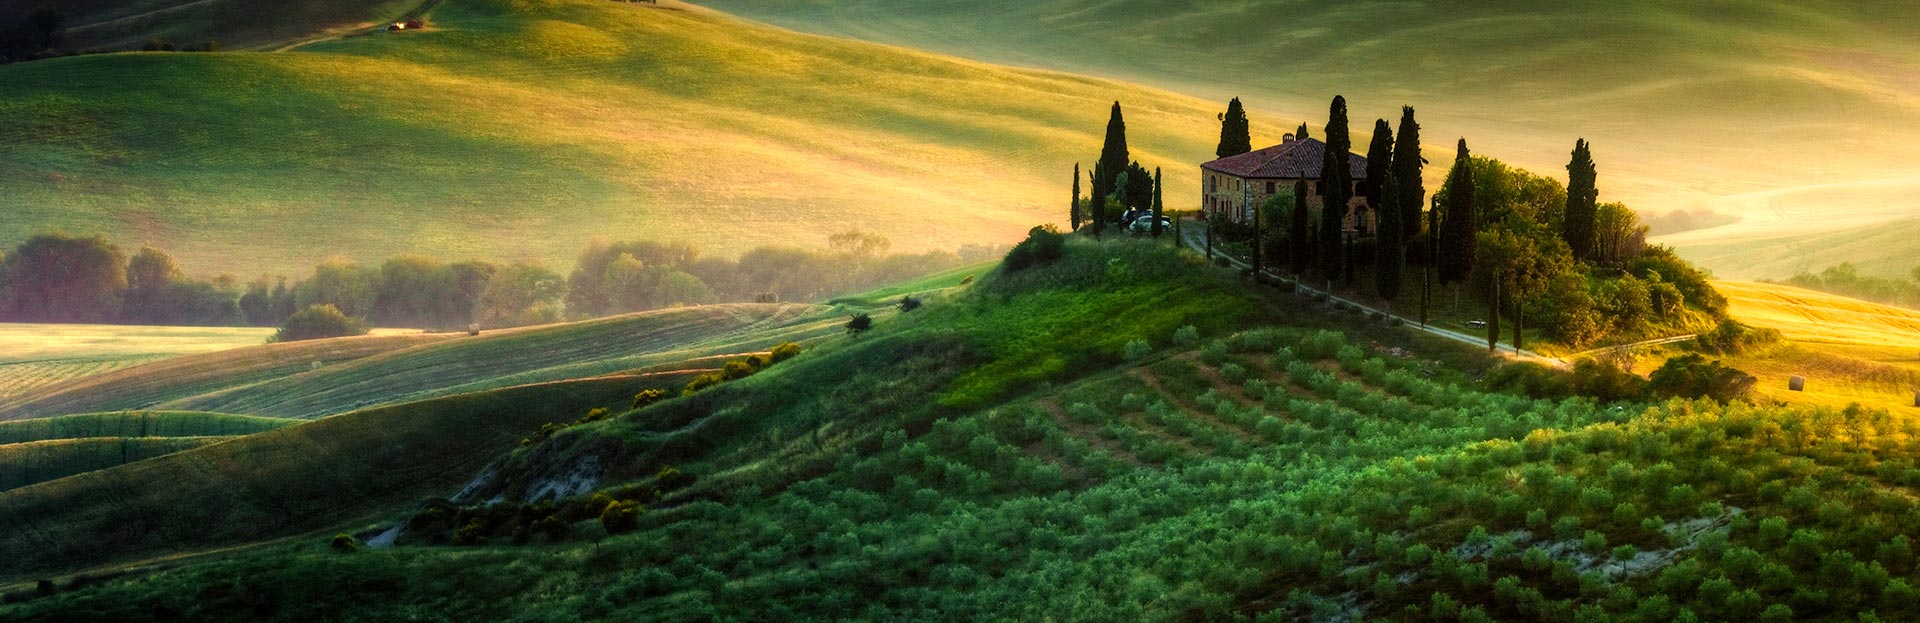 Italy Tuscany Landscape